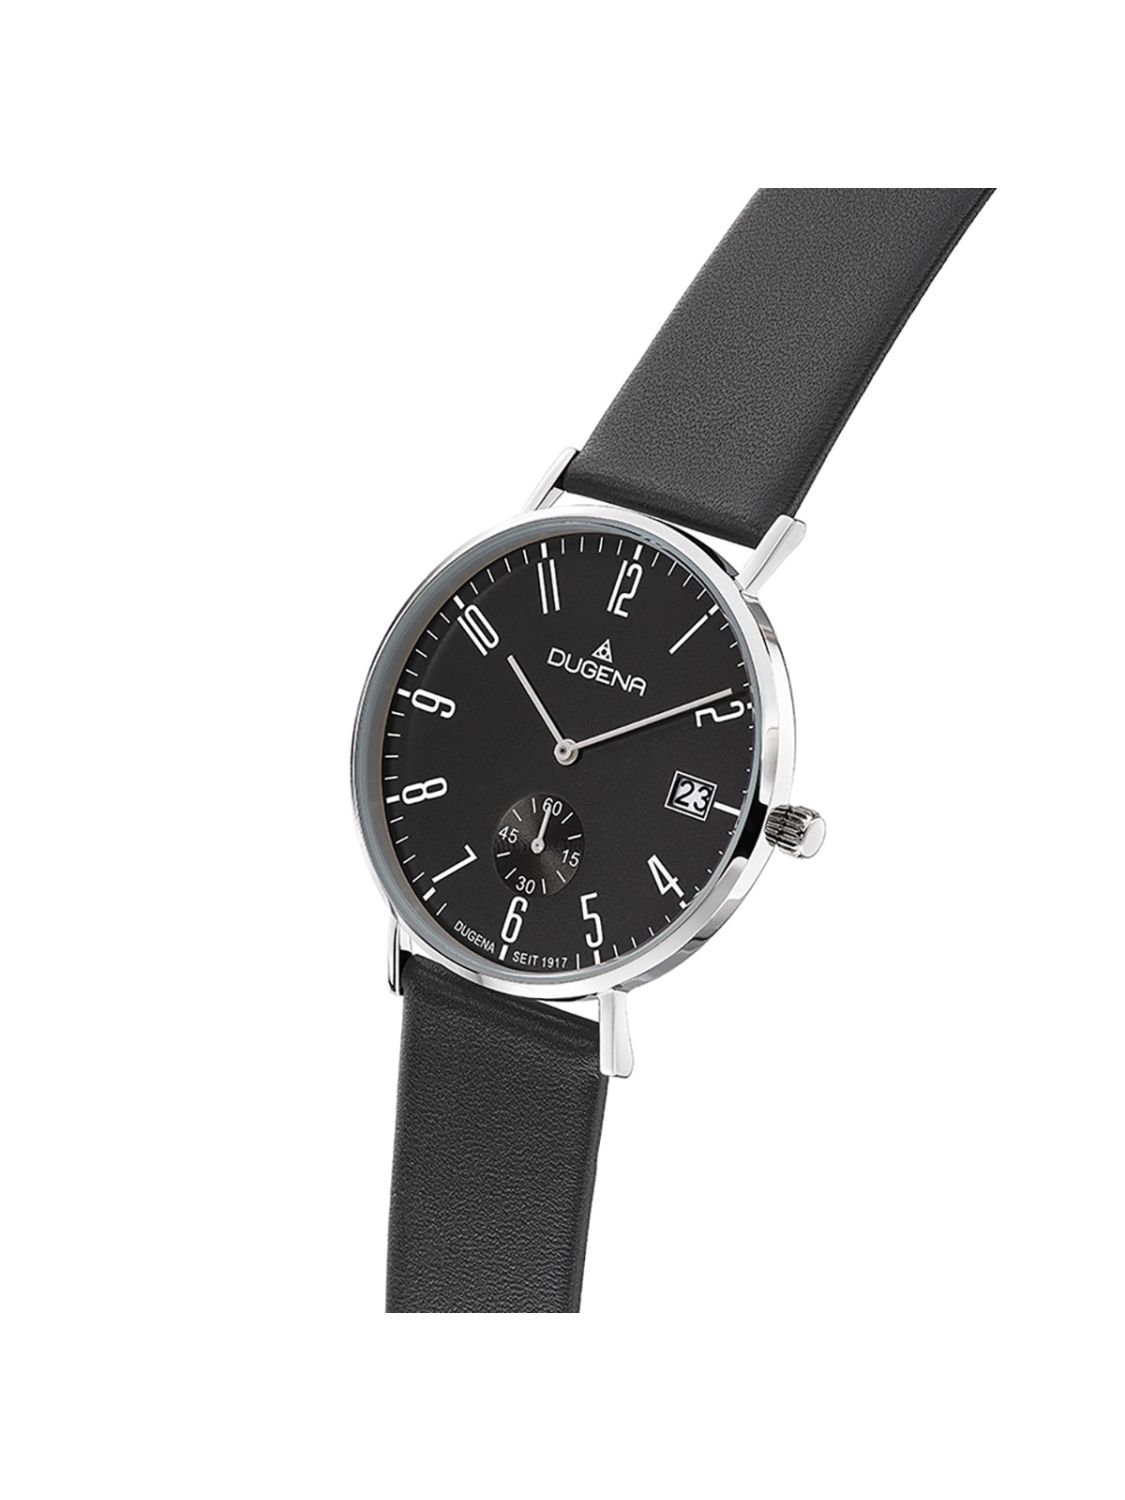 Dugena Men's Quartz Watch Mondo Black Leather Strap 4460666-1 • uhrcenter